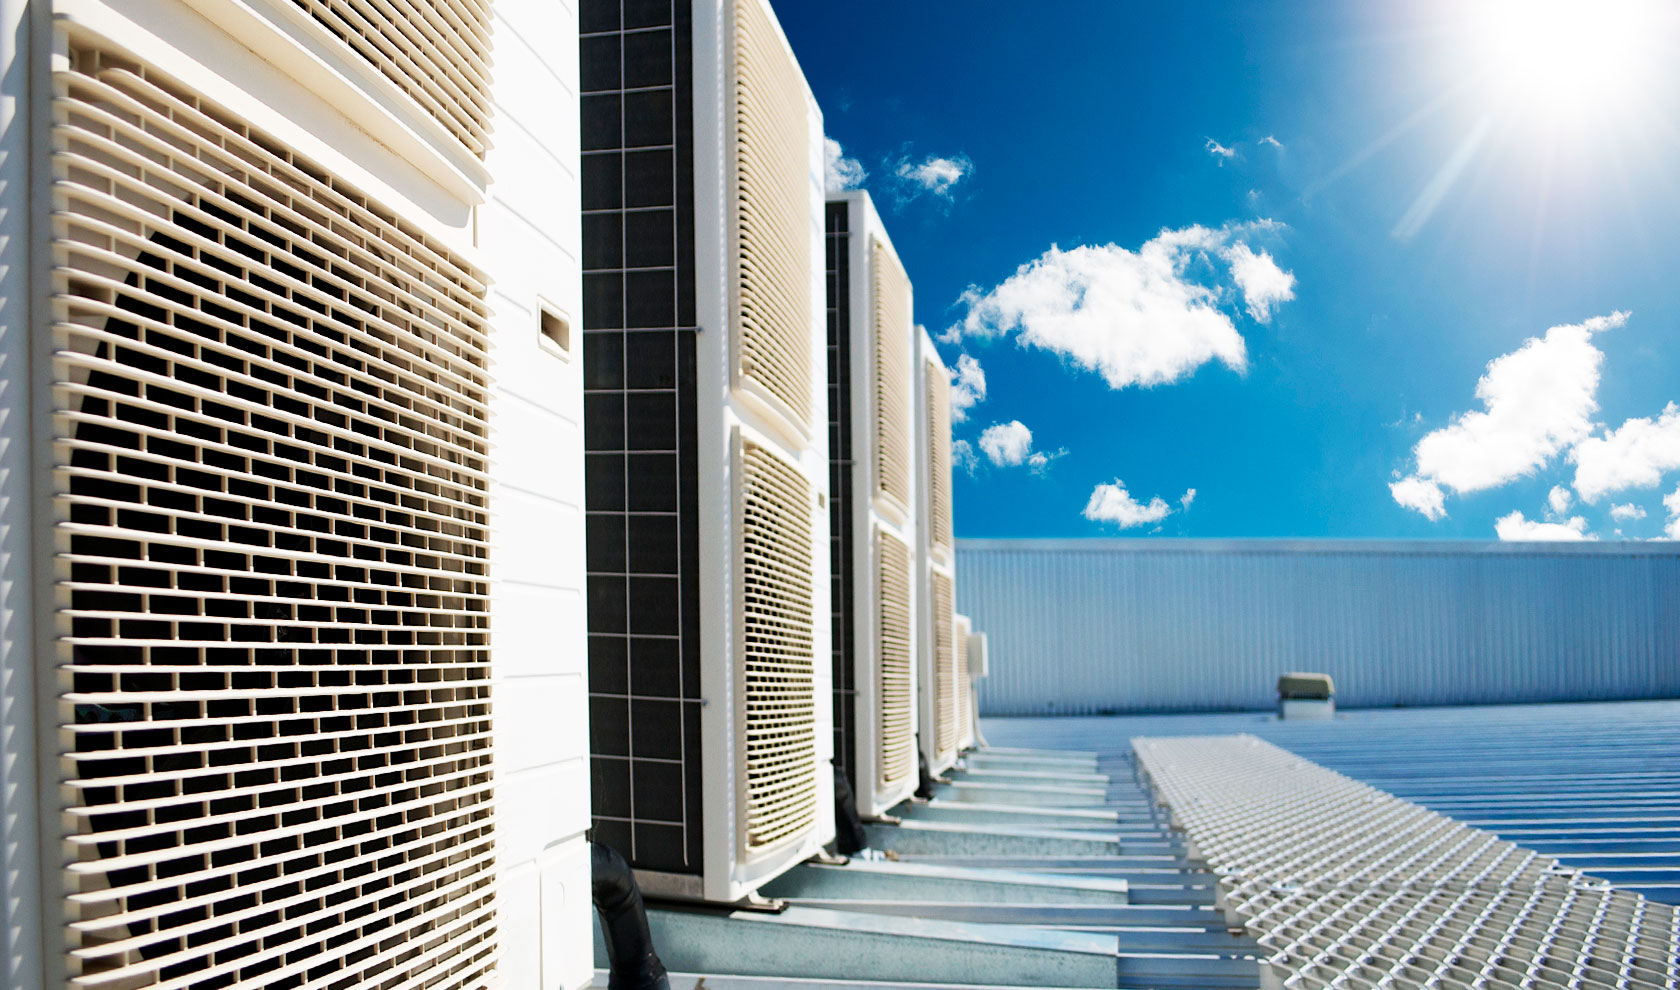 Air conditioning Kältetechnik Frankonia-Hydraulik, Ventilatoren auf Dach, Belüftungssystem bewölkter sonniger Himmel